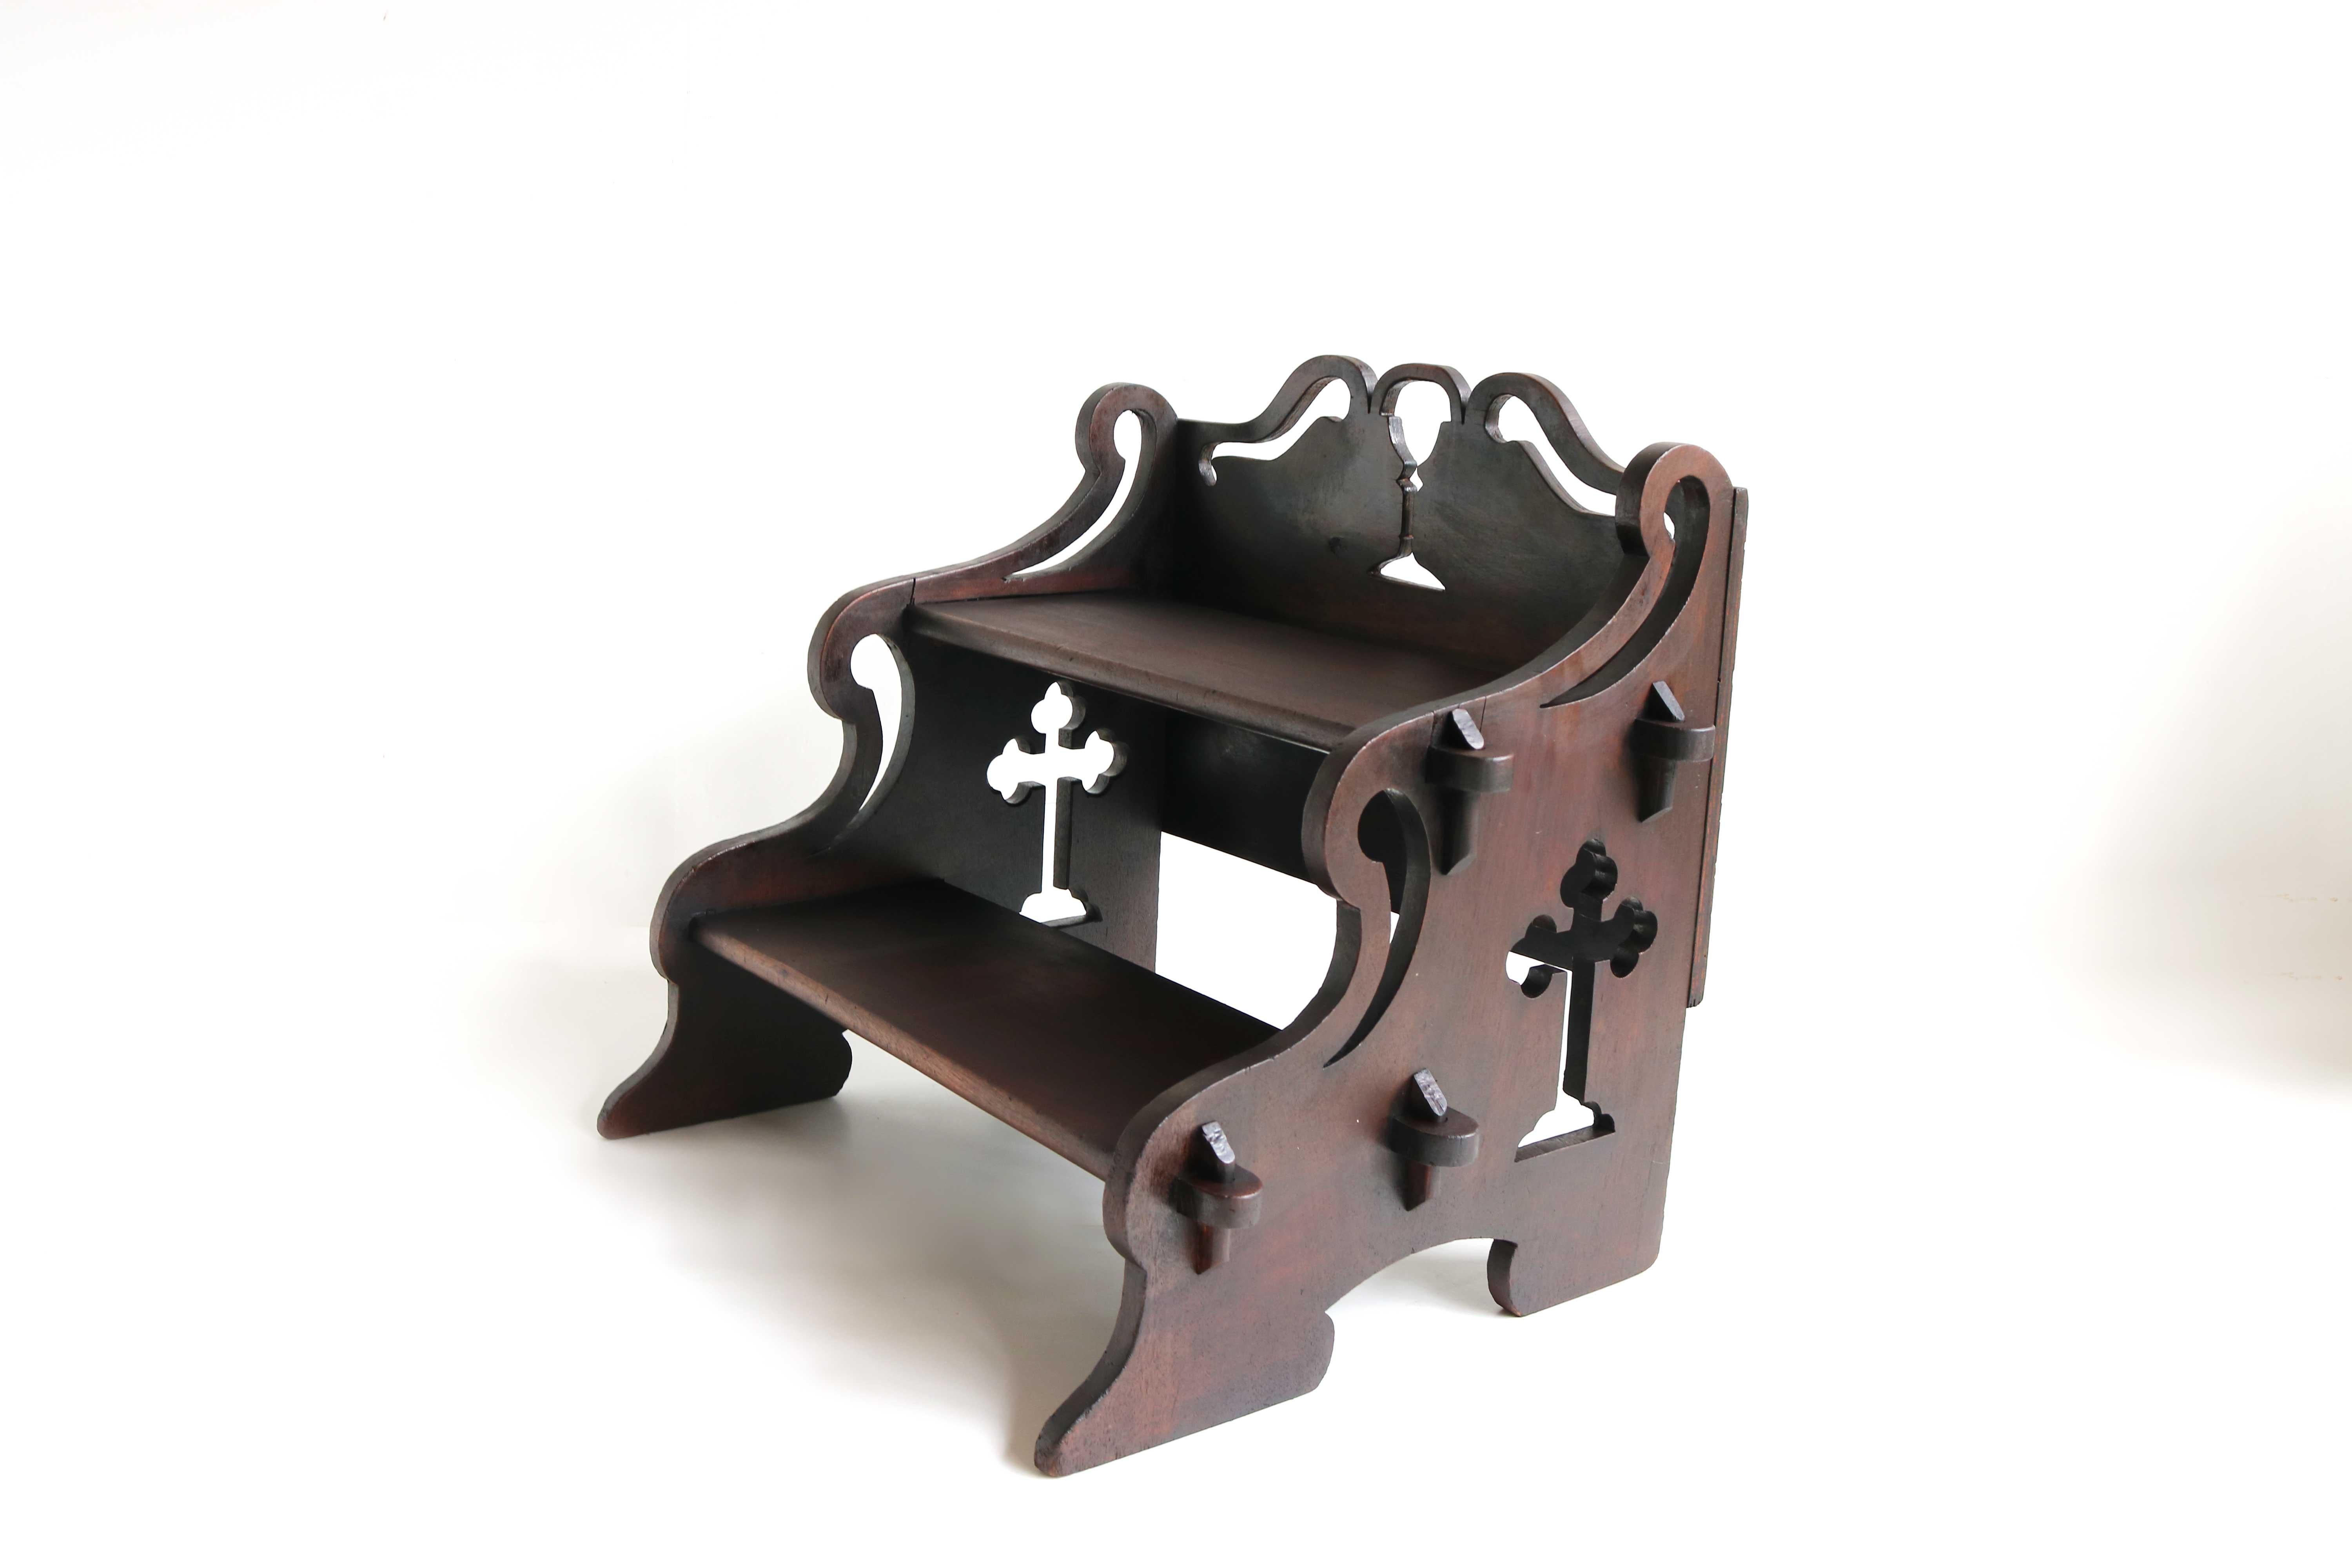 Jugendstil prayer chair or altar, side table/display table/stairs Ca. 1890-1914 For Sale 1